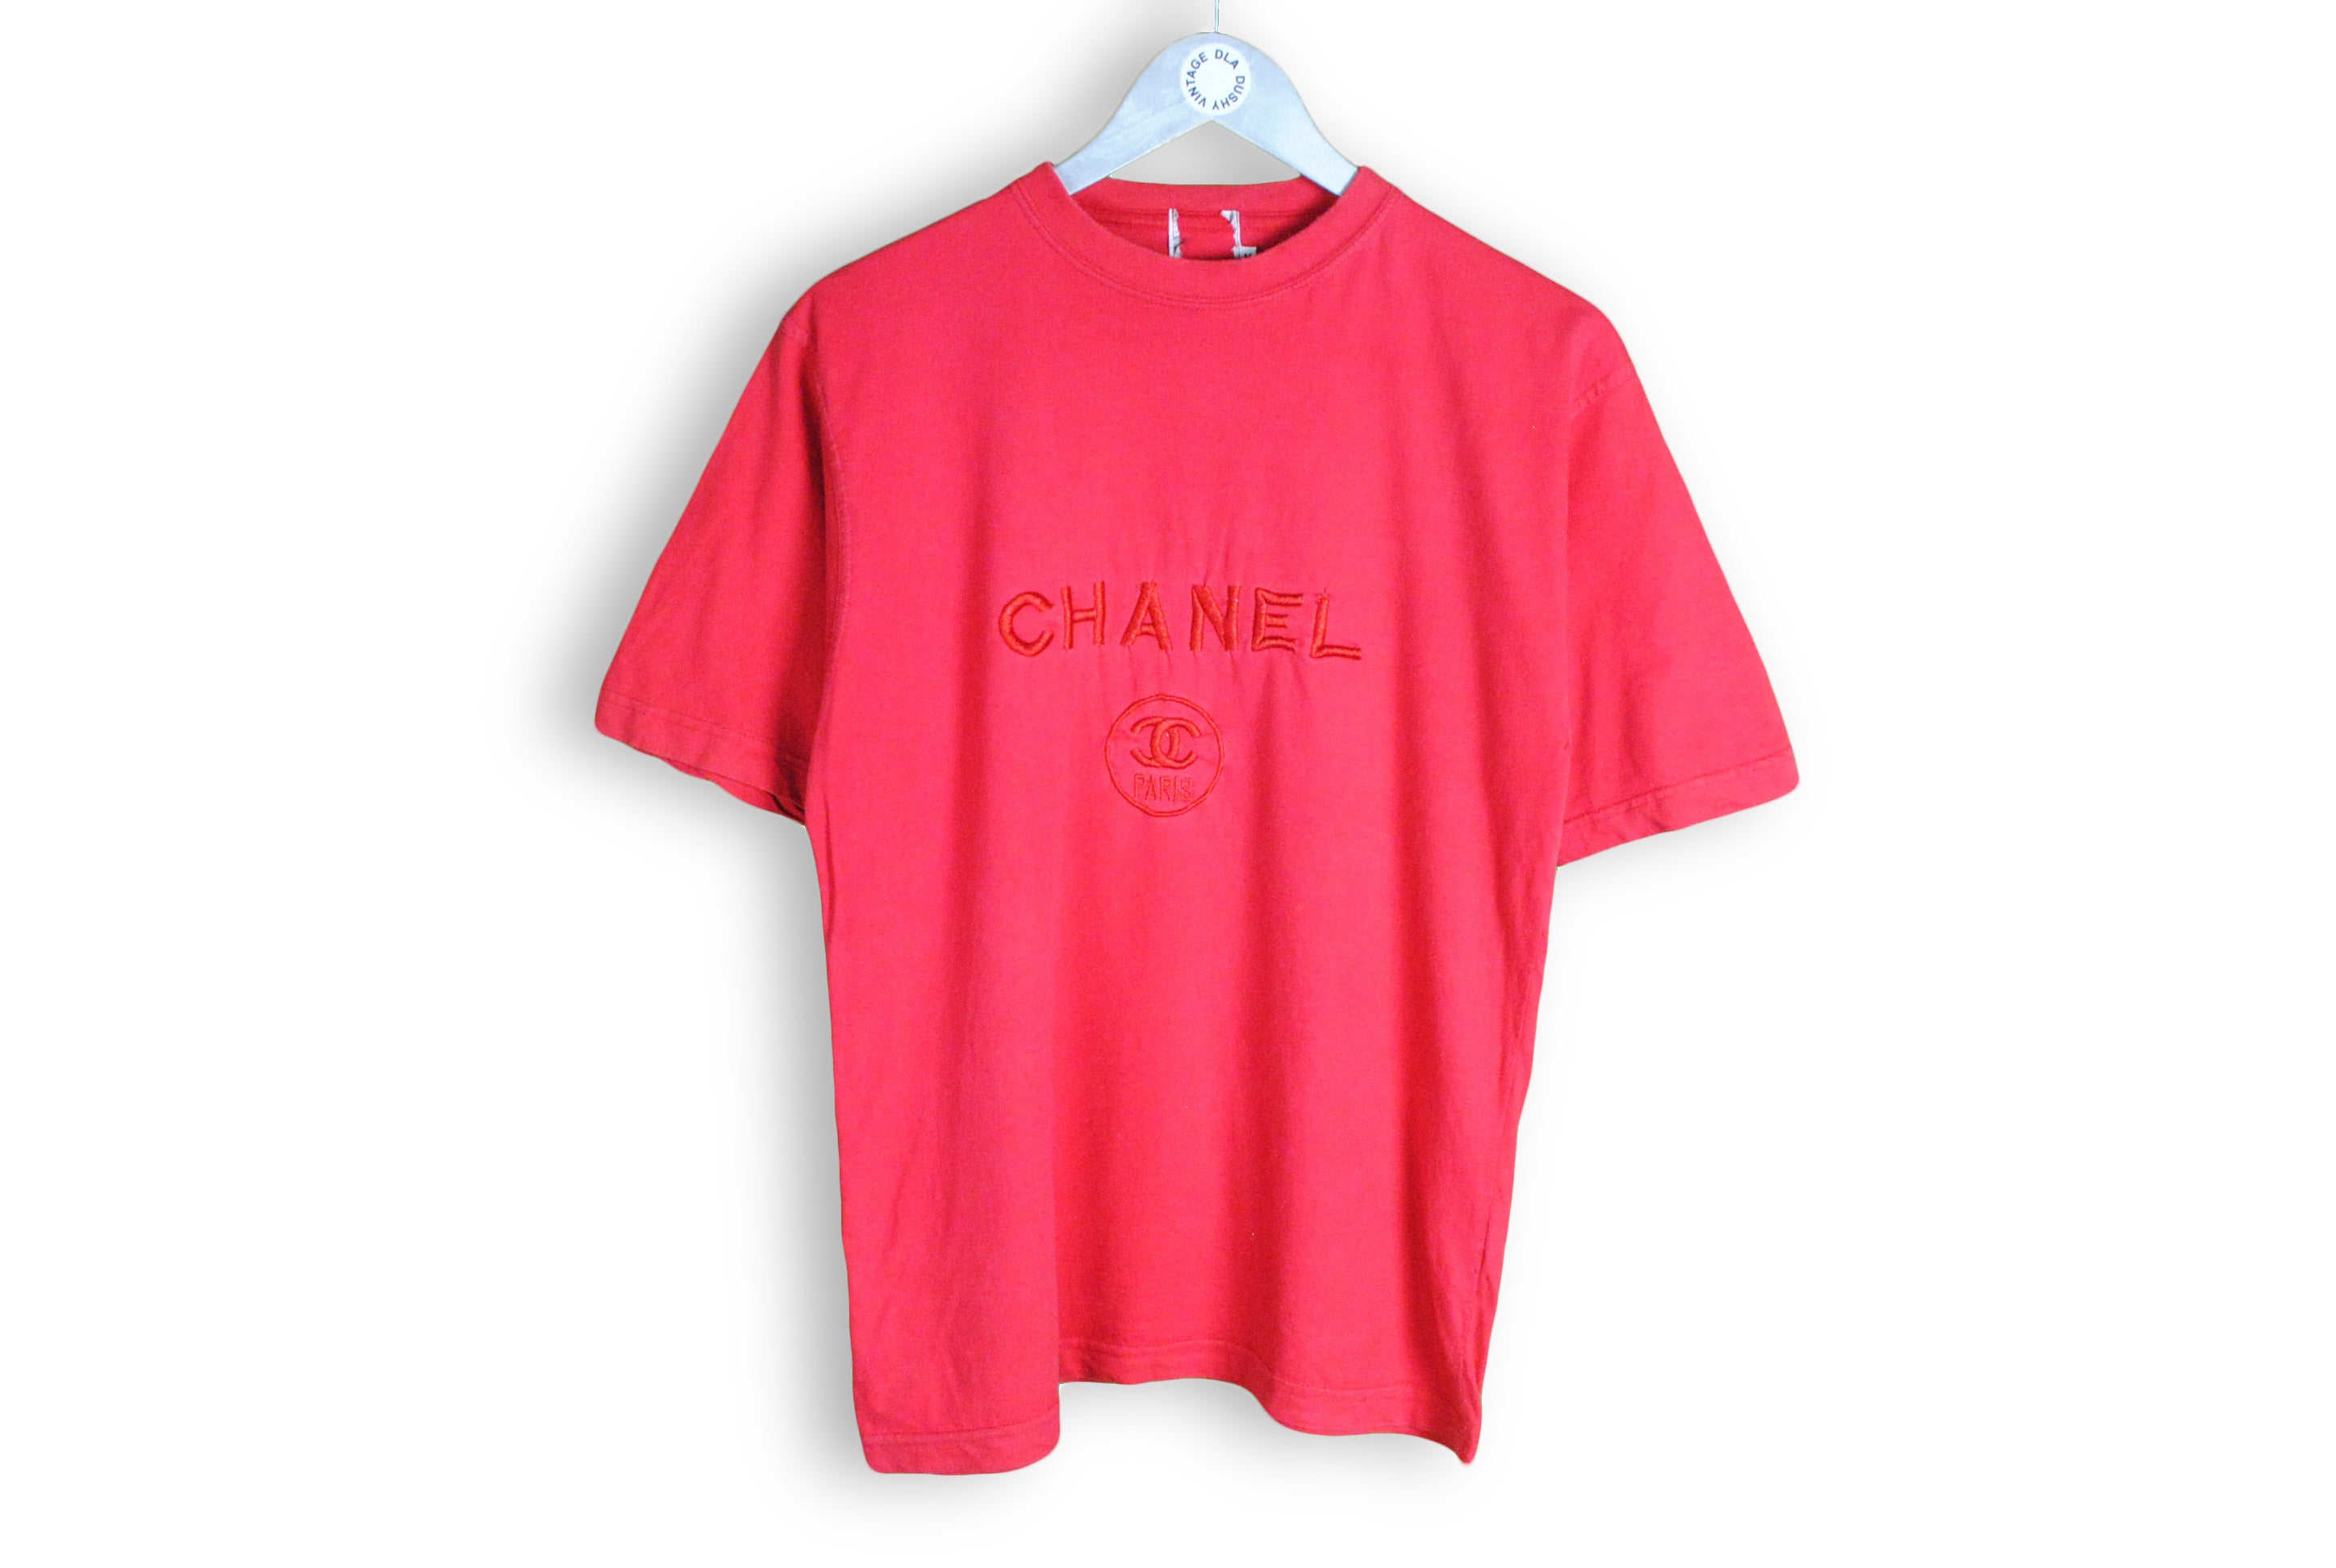 chanel t shirt women's price